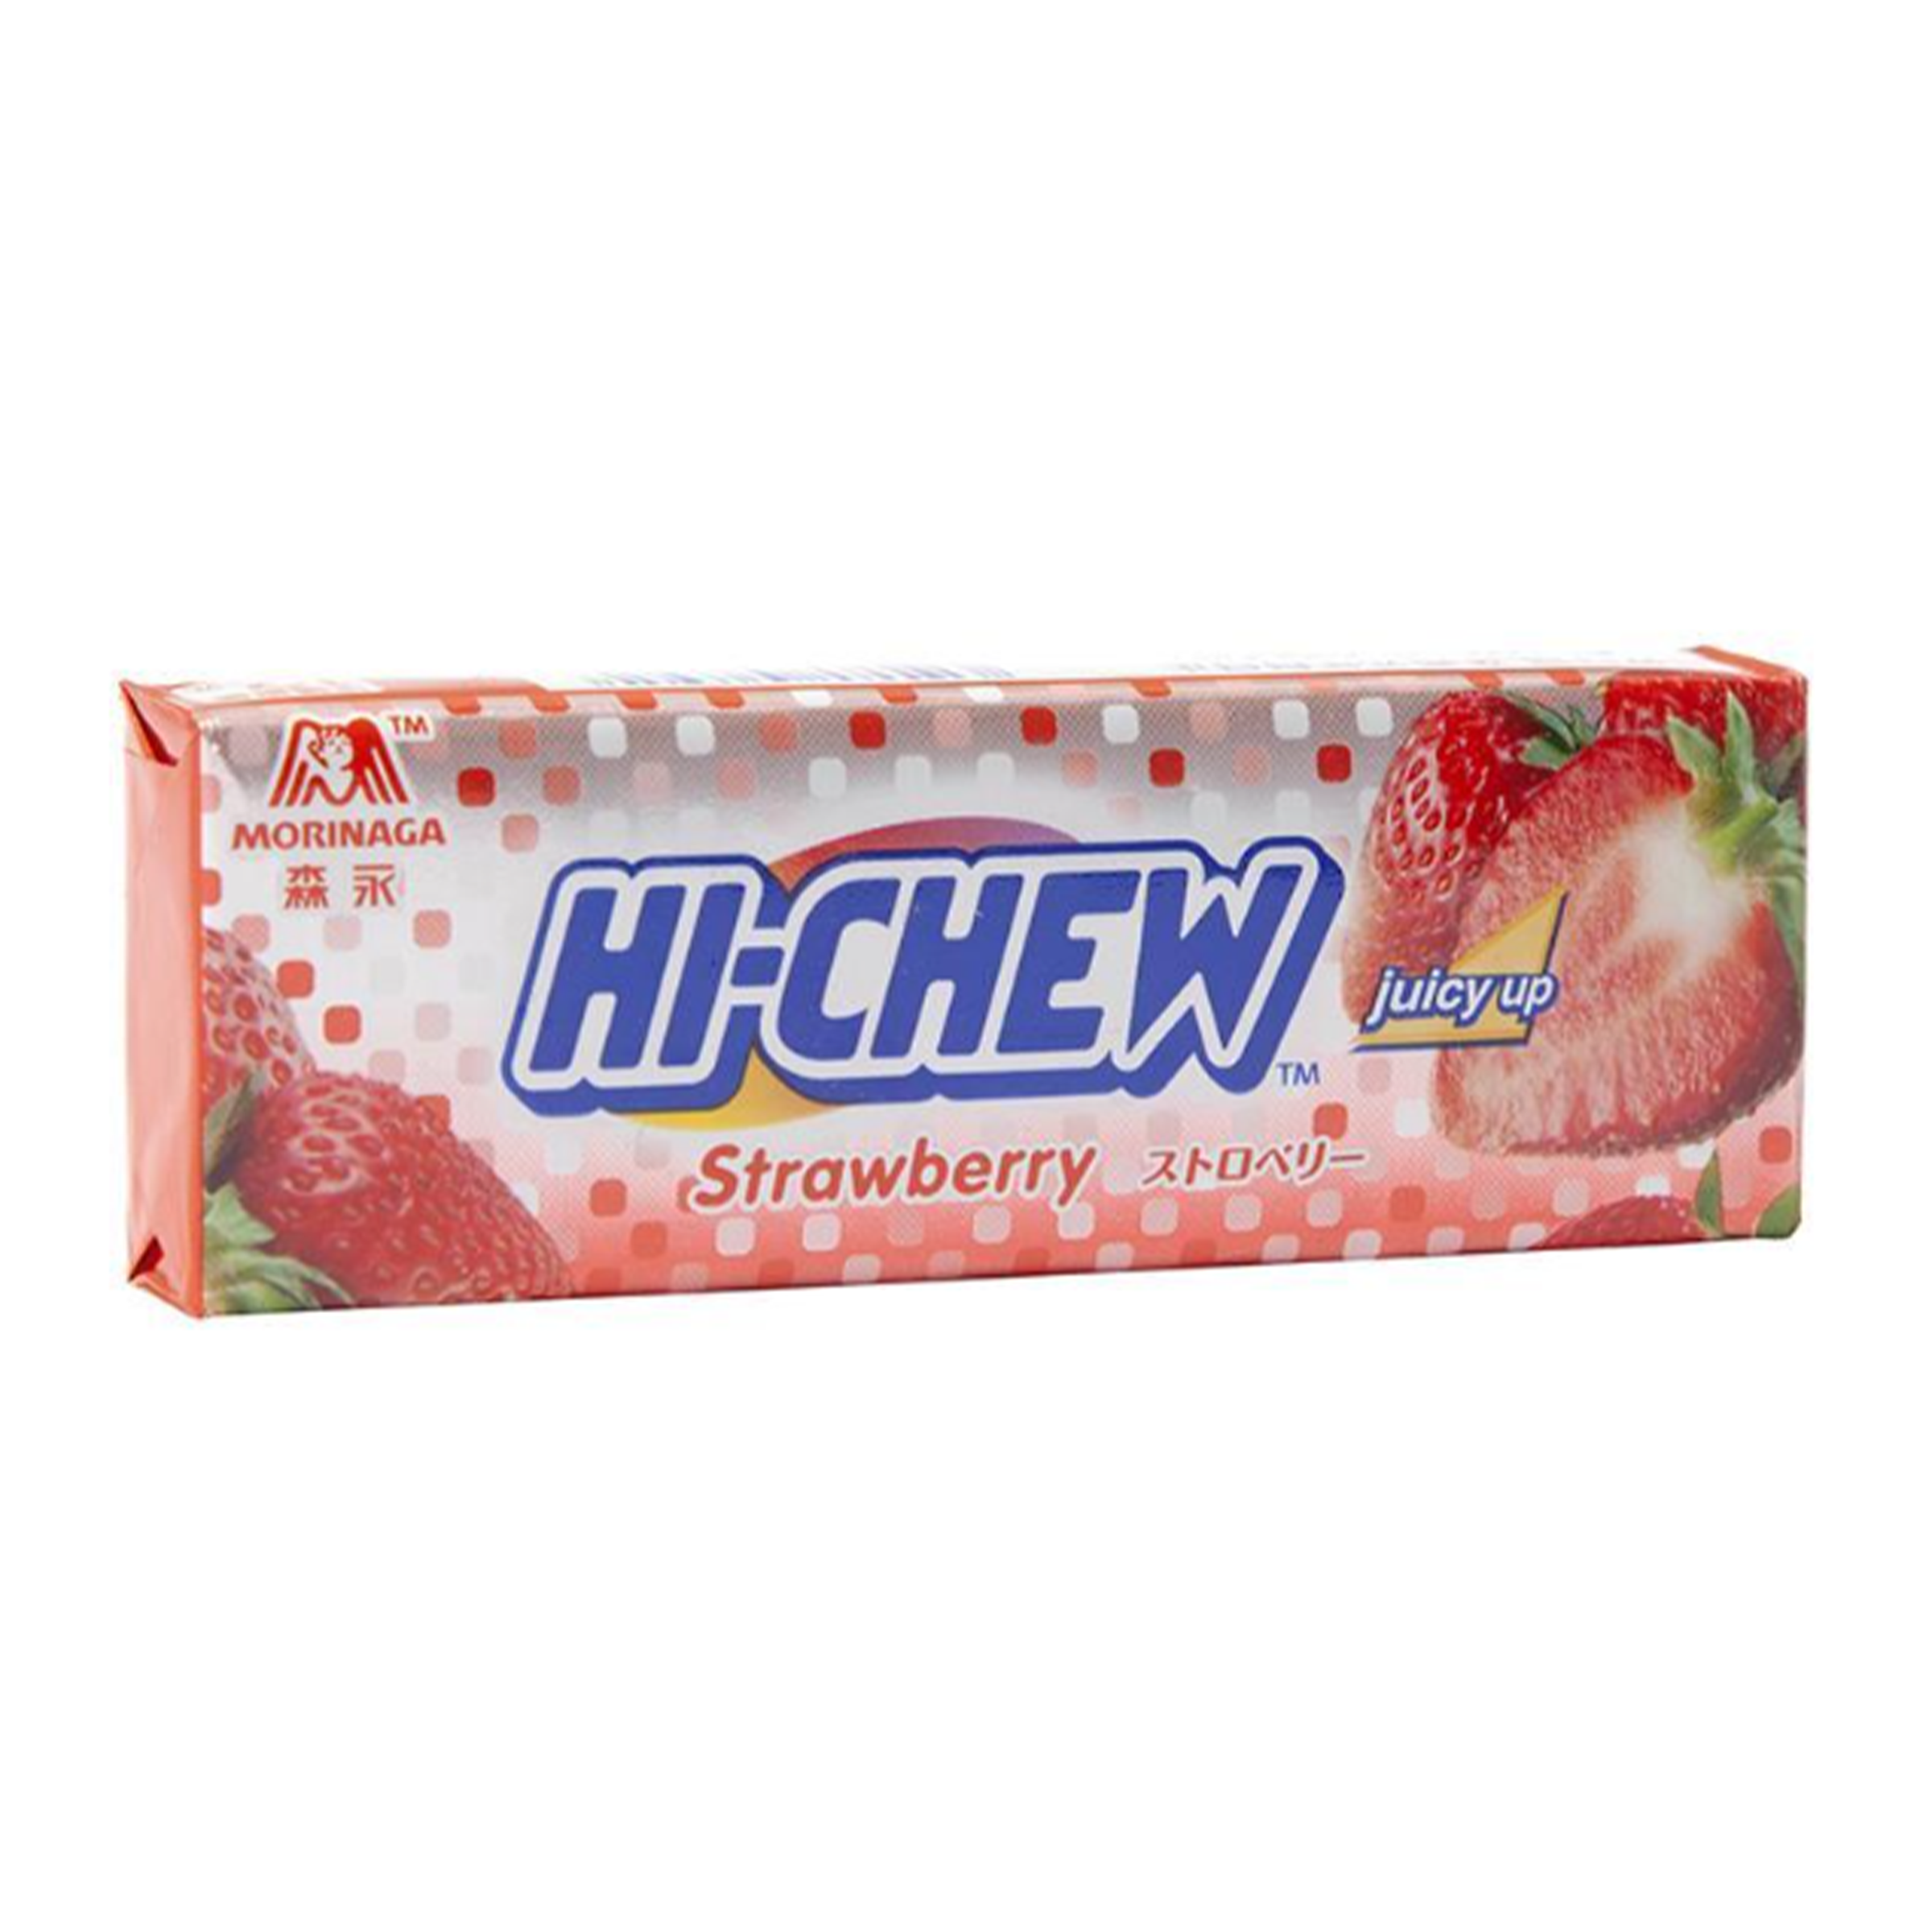 Hi-Chew - Strawberry (Asia)